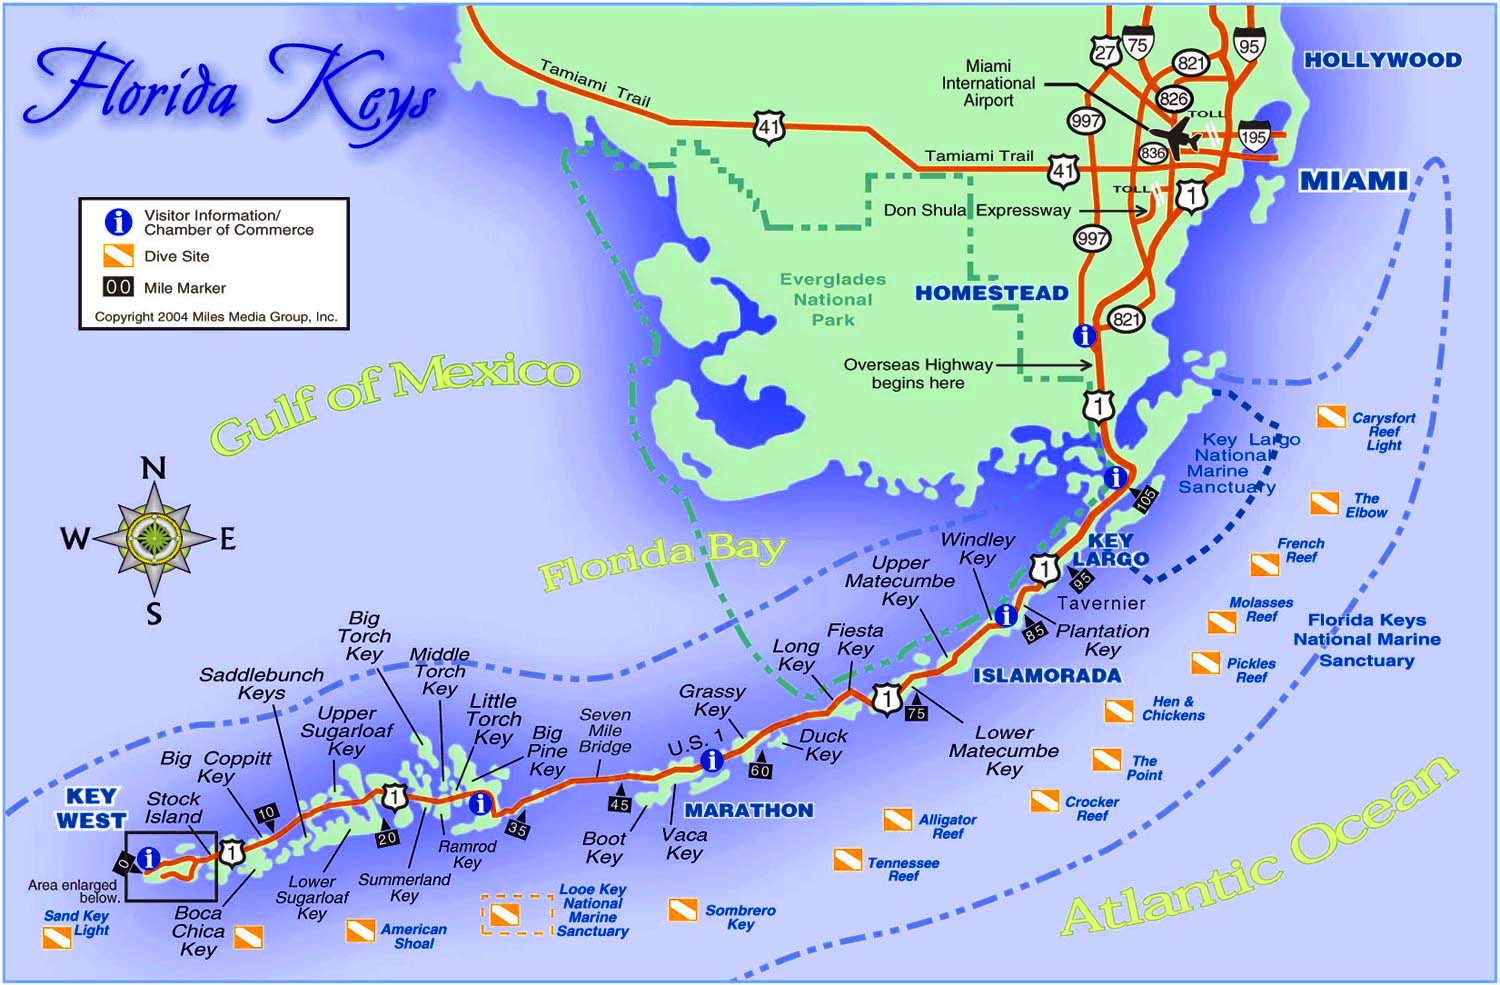 https://blogger.googleusercontent.com/img/b/R29vZ2xl/AVvXsEjG00qsqg4qFKXTDiYtppd6xjpNRwXpw7hOMCTxP5su2ik5khtS77Oi5wcFiiLoAWo490ePJuaFyeTFAaEqgE9Gr4i2xunlgvcZ-ykf4_ayDw2IW8KZGiej7YbDoC4gyoPcNESHAxKAyjs/s1600/Florida+Keys+Map.jpg